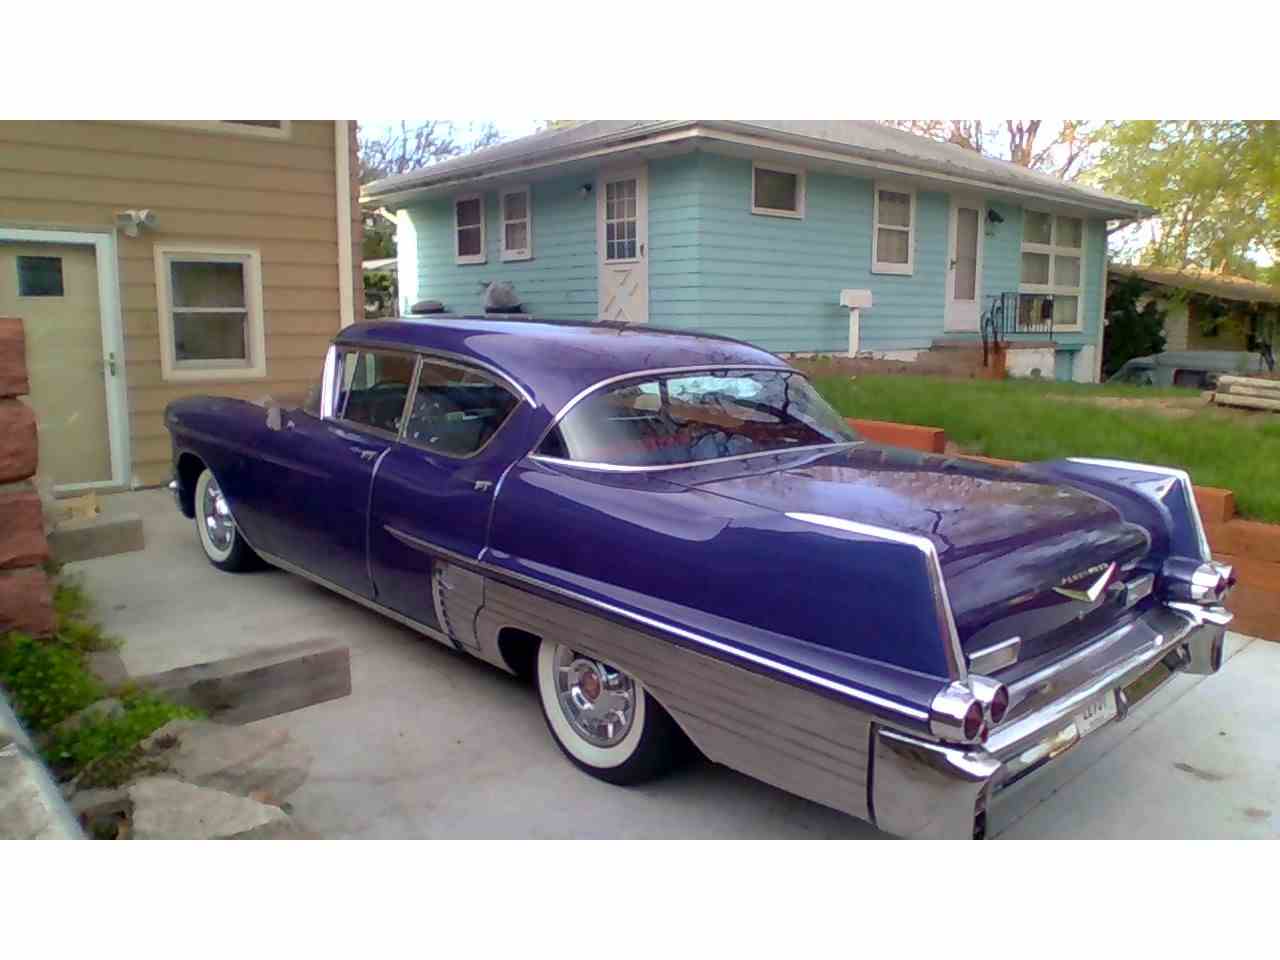 1957 Cadillac Fleetwood 60 for Sale | ClassicCars.com | CC ...